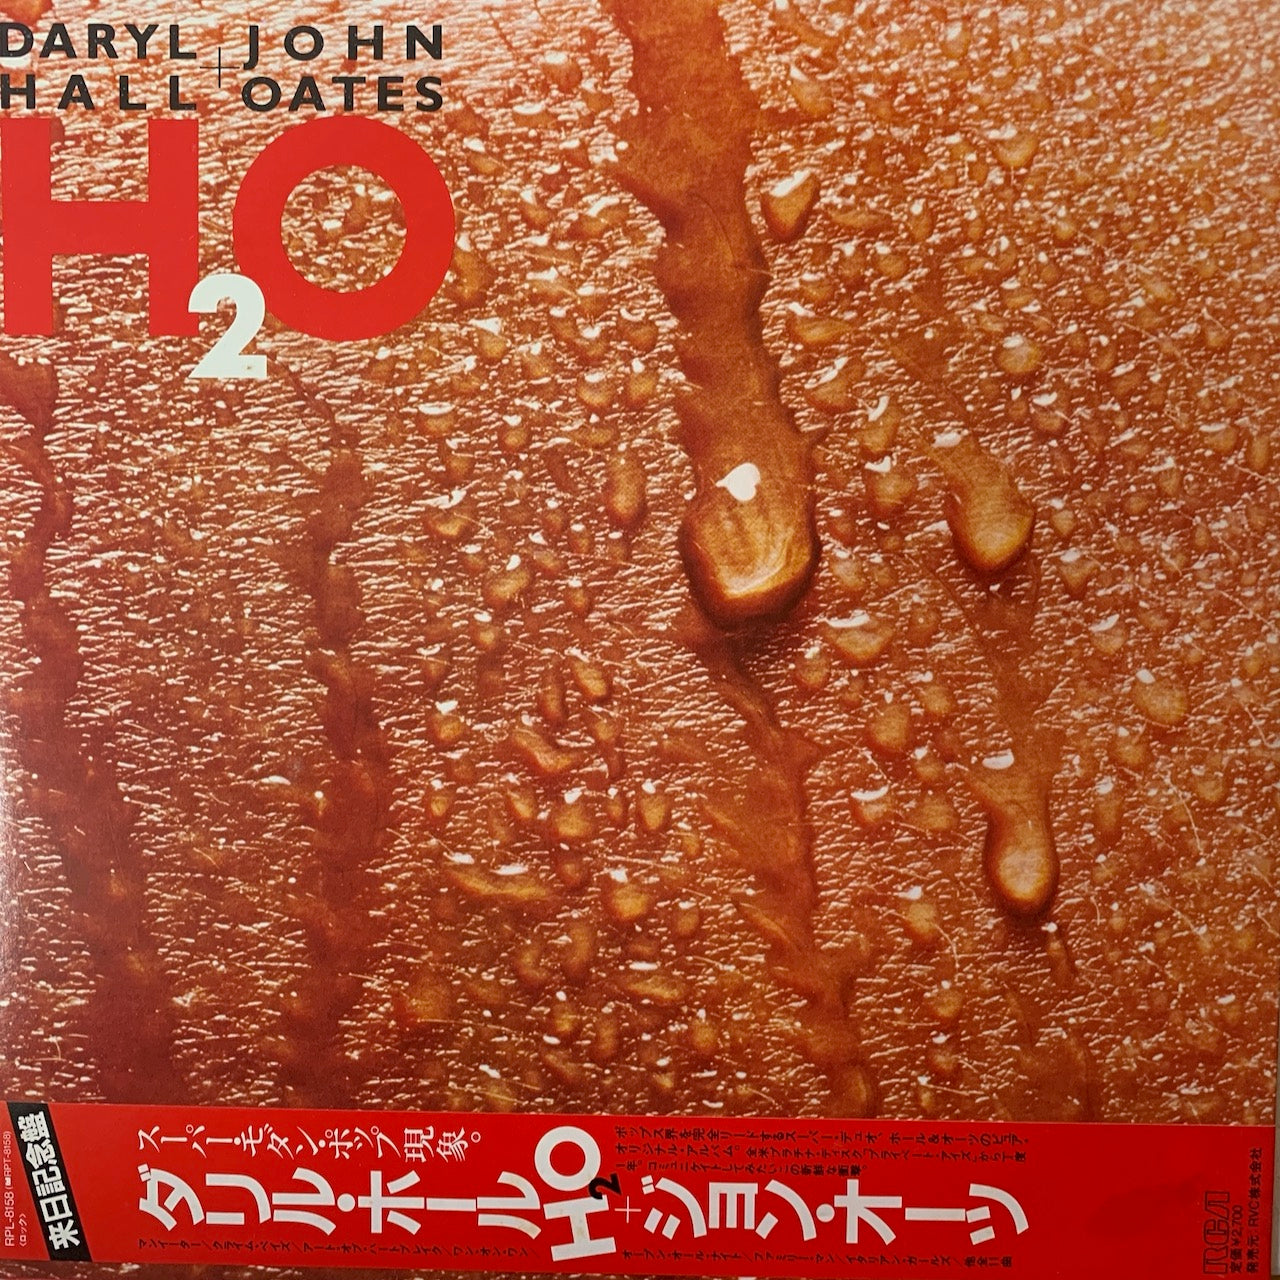 DARYL HALL & JOHN OATES - H₂O    NM /NM  1982